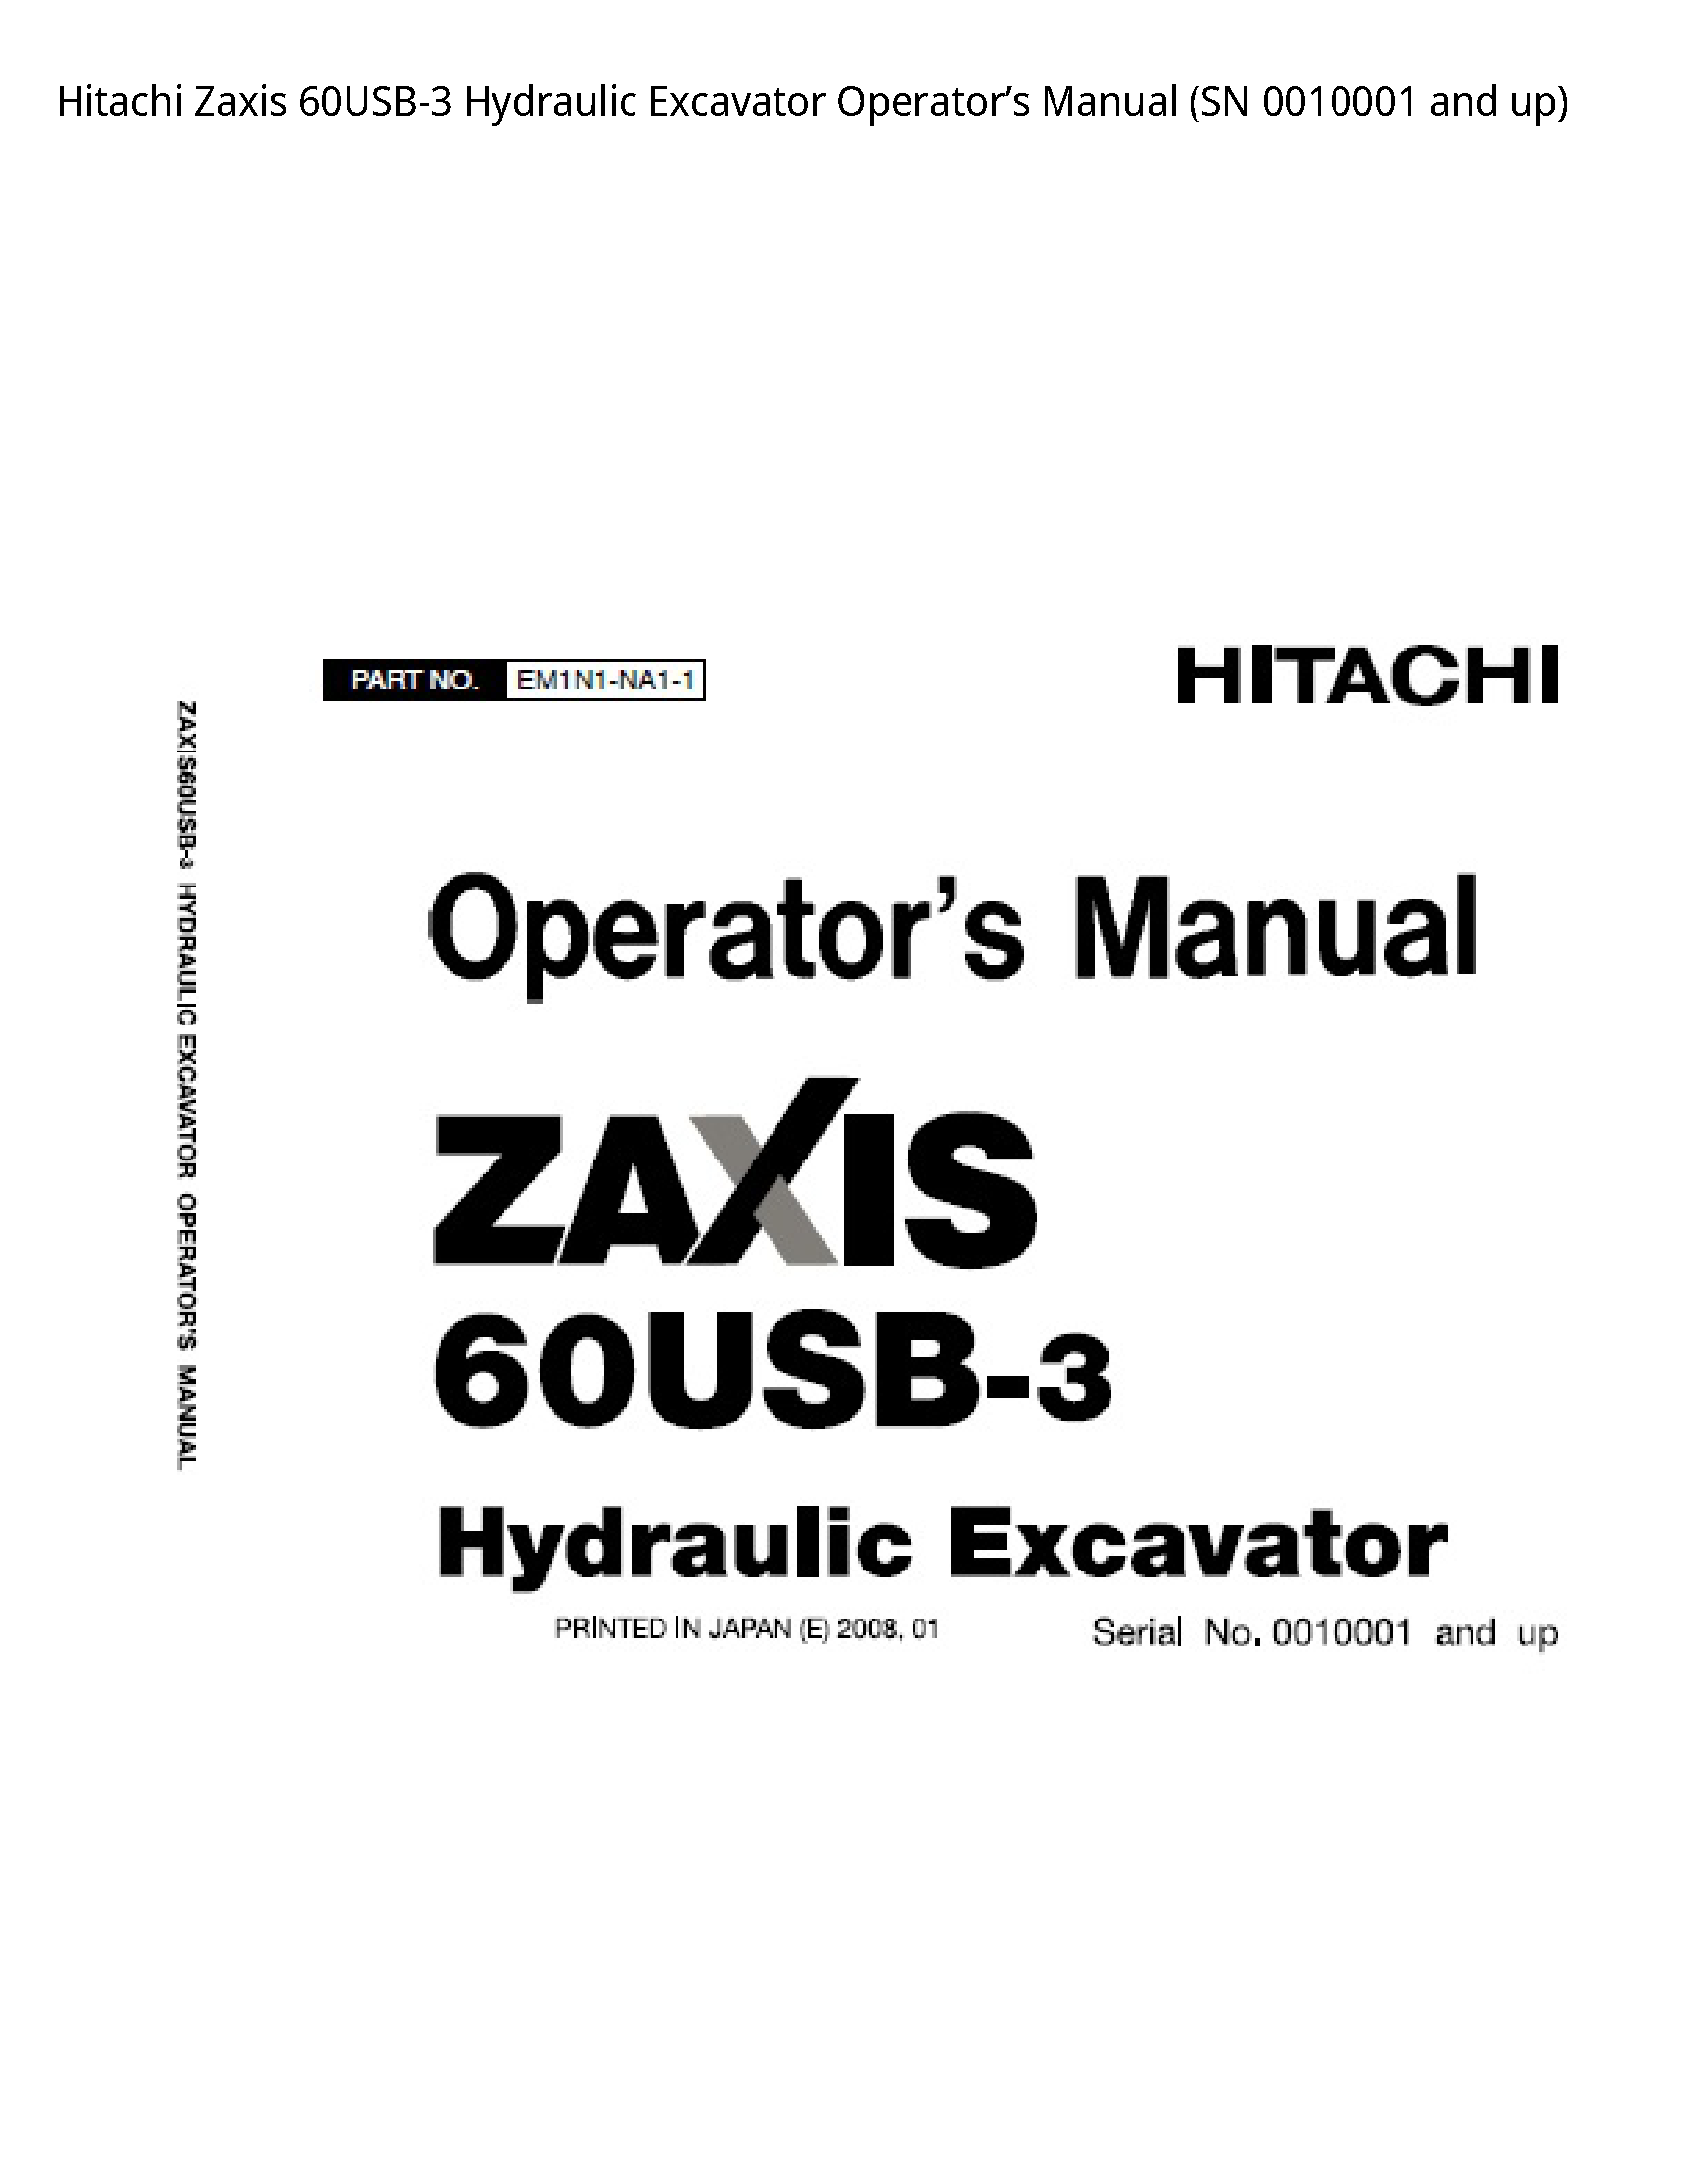 Hitachi 60USB-3 Zaxis Hydraulic Excavator Operator’s manual